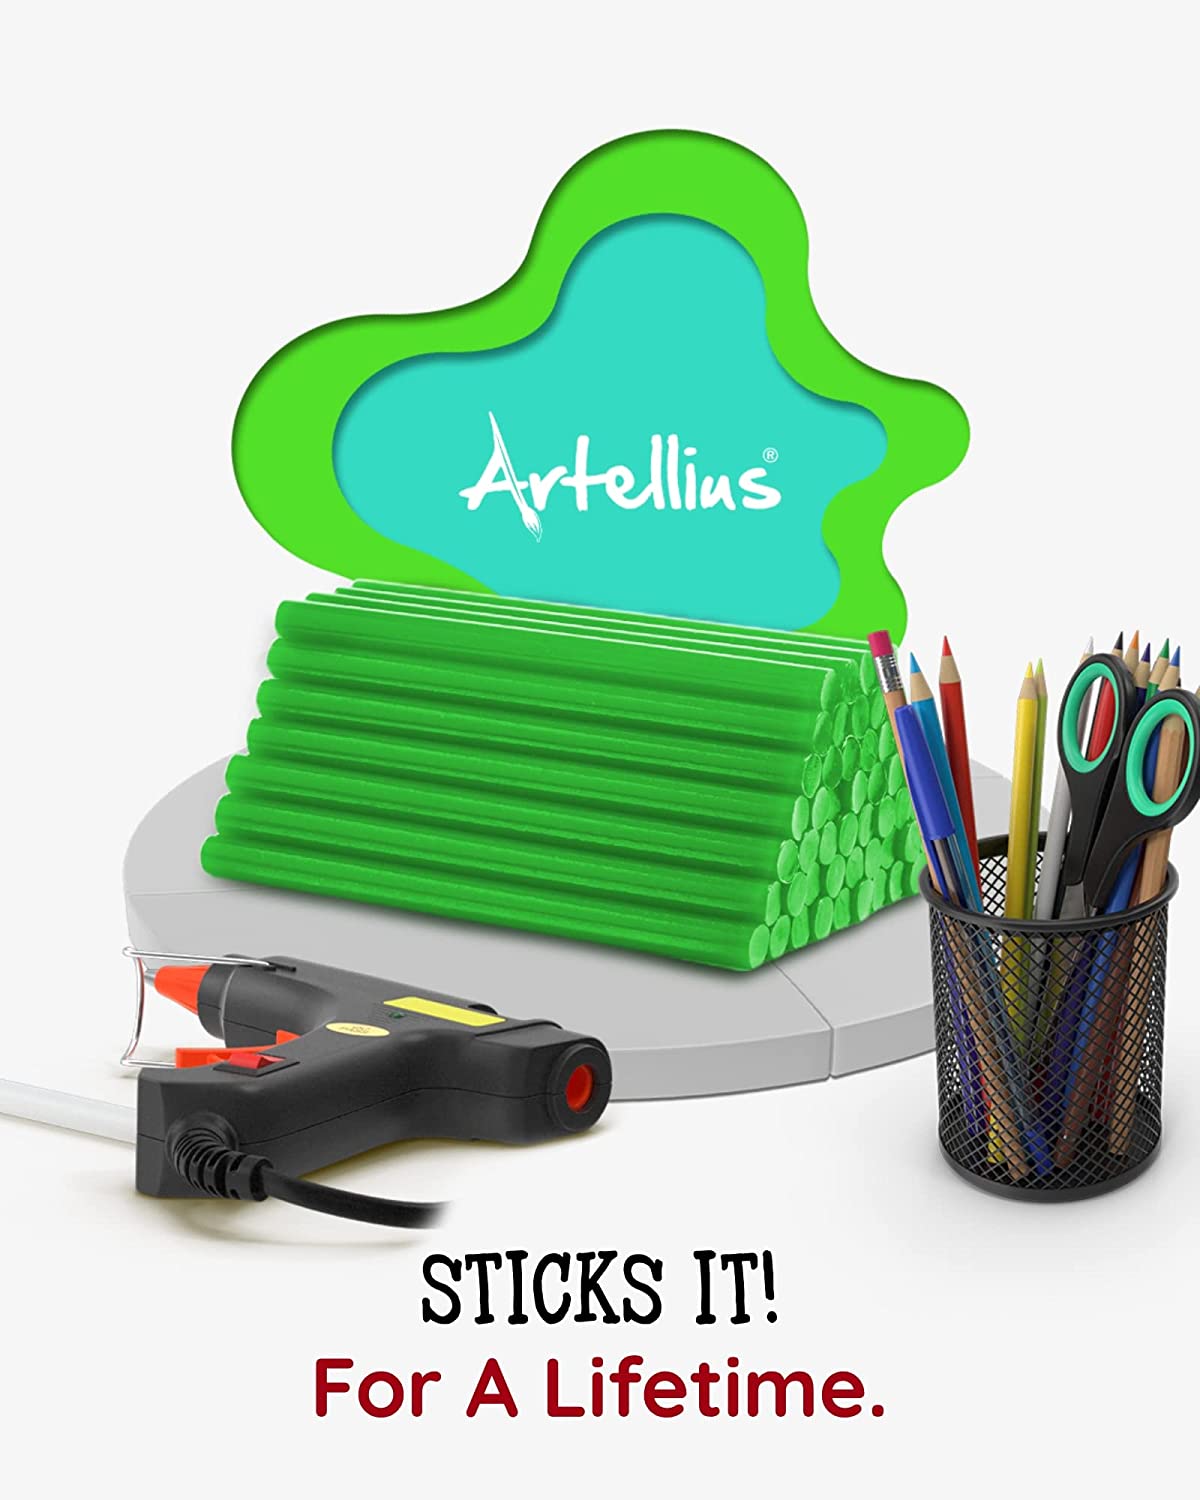 100 Pack Color Hot Glue Sticks. Green Colored Glue Gun Sticks. Hot Melt Adhesive Mini Glue Sticks for DIY Art Craft Repair Bonding Bulk Gold Black